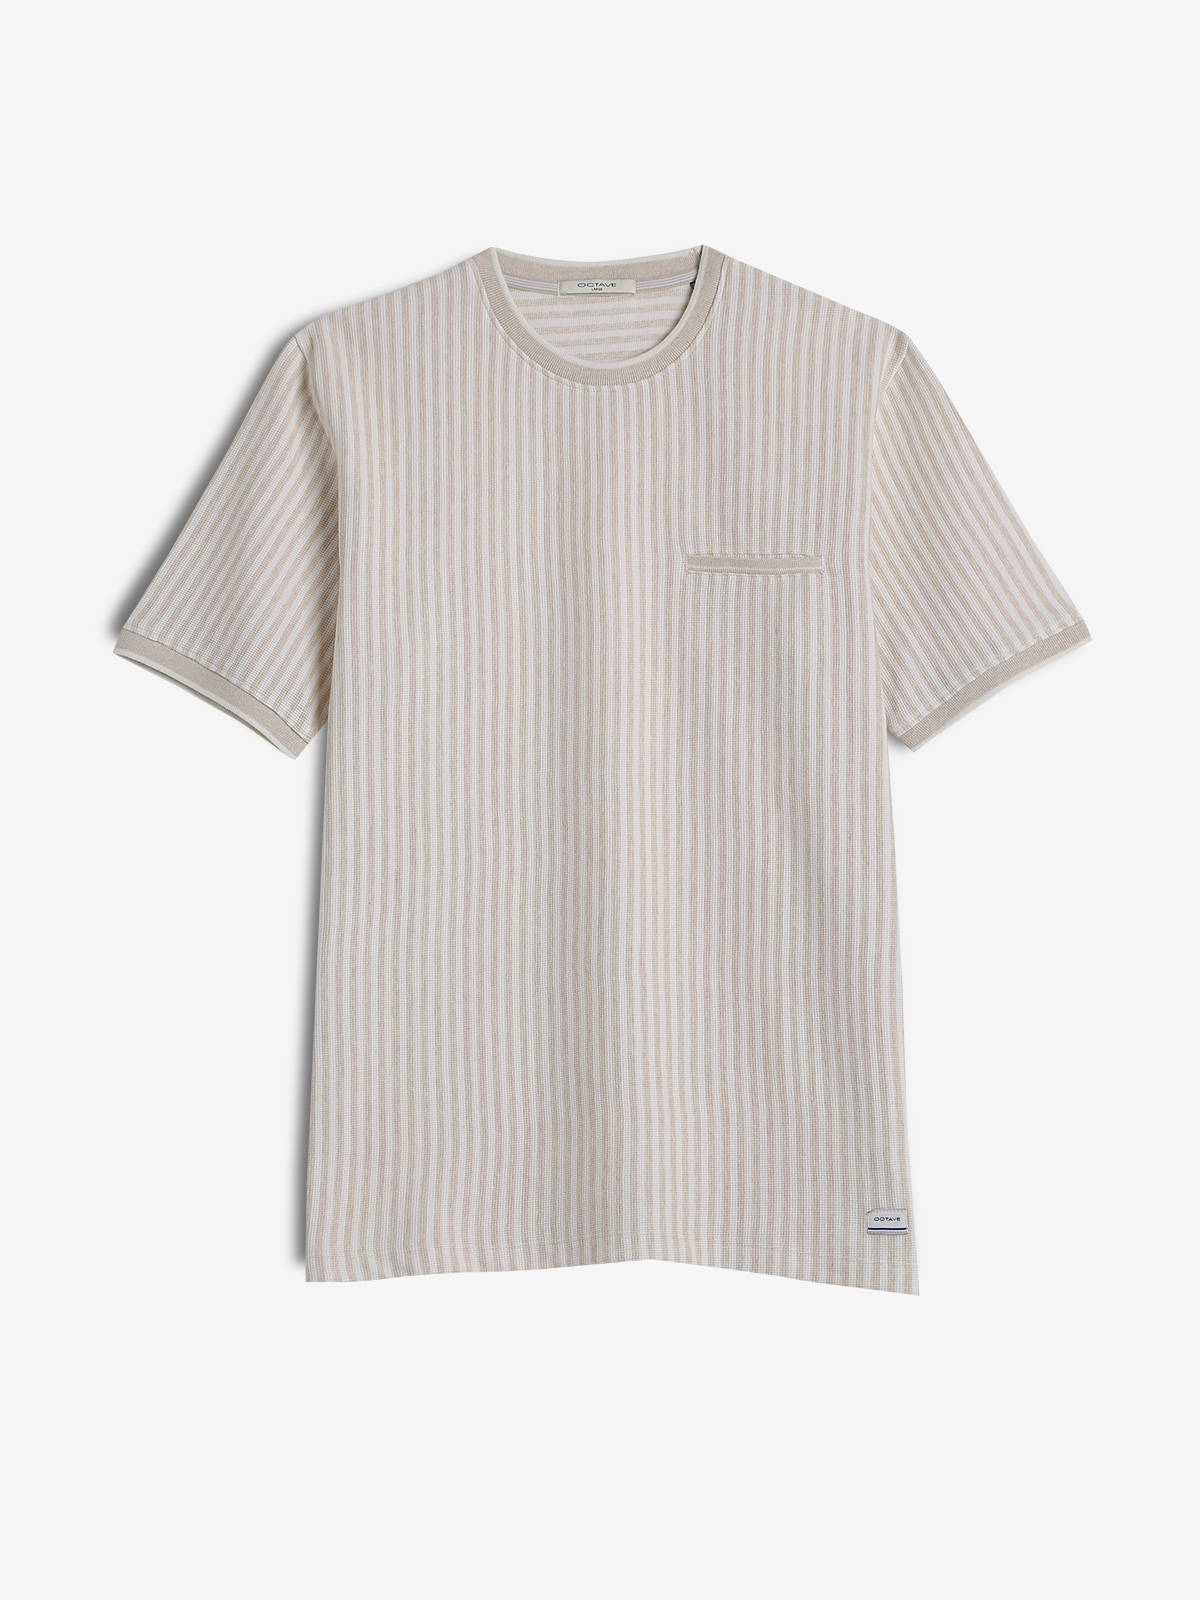 OCTAVE cream stripe cotton t-shirt - G3-MTS18429 | G3fashion.com